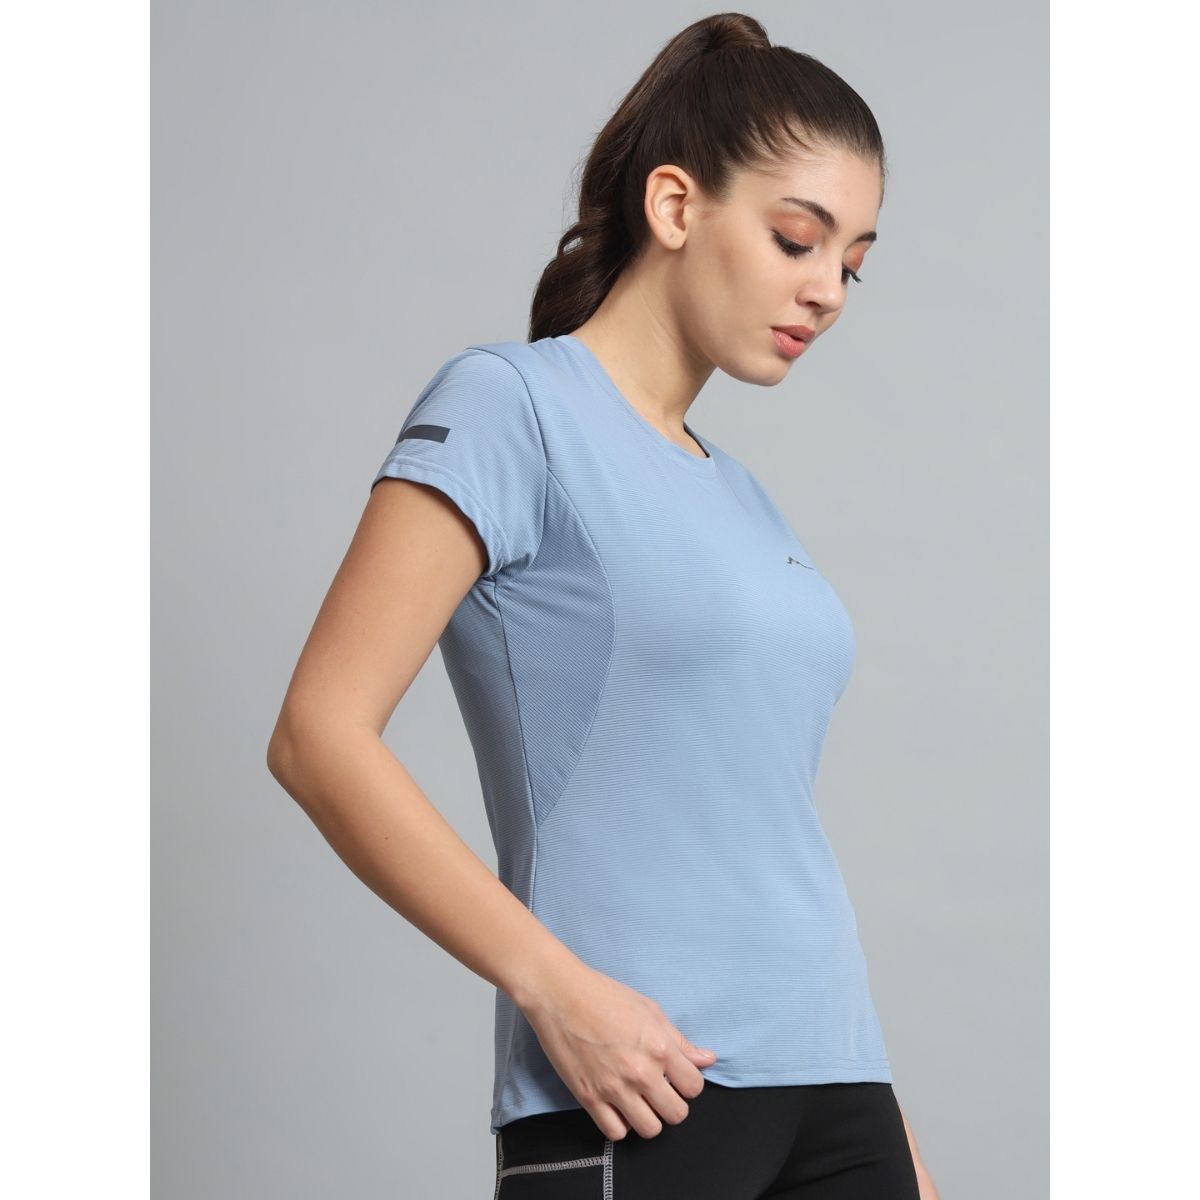 Women's Ultralight Athletic Half Sleeves T-Shirt - Dusk Blue 5